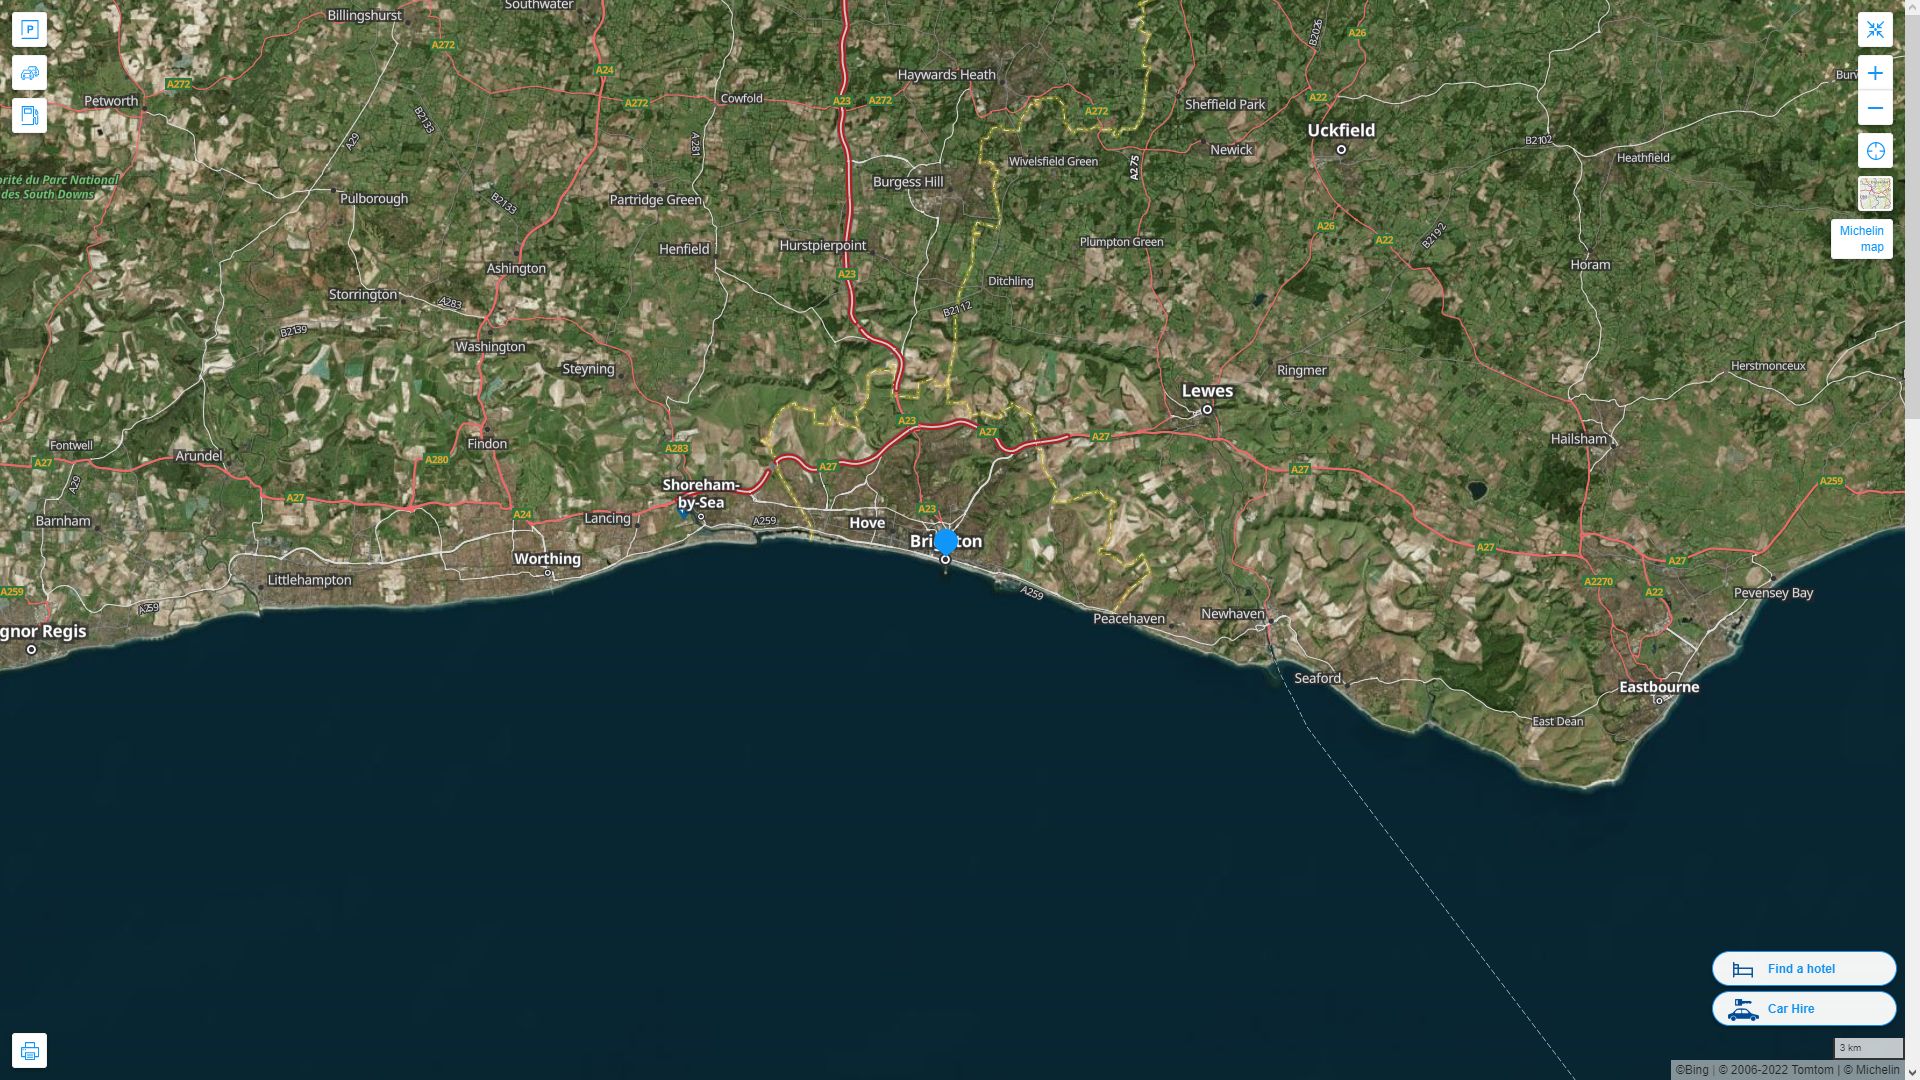 Brighton Royaume Uni Autoroute et carte routiere avec vue satellite